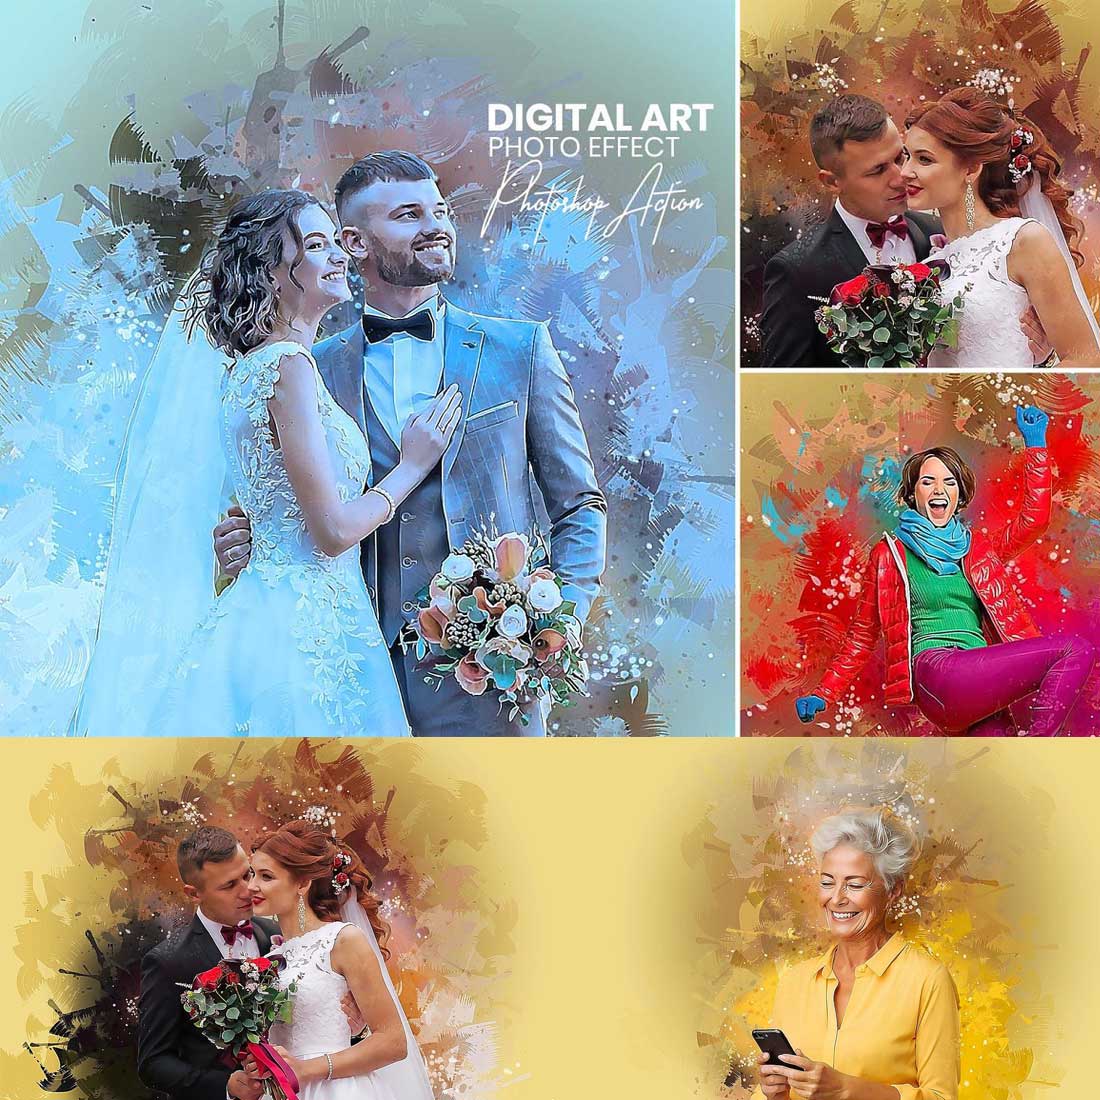 Digital Art Photoshop Action cover image.